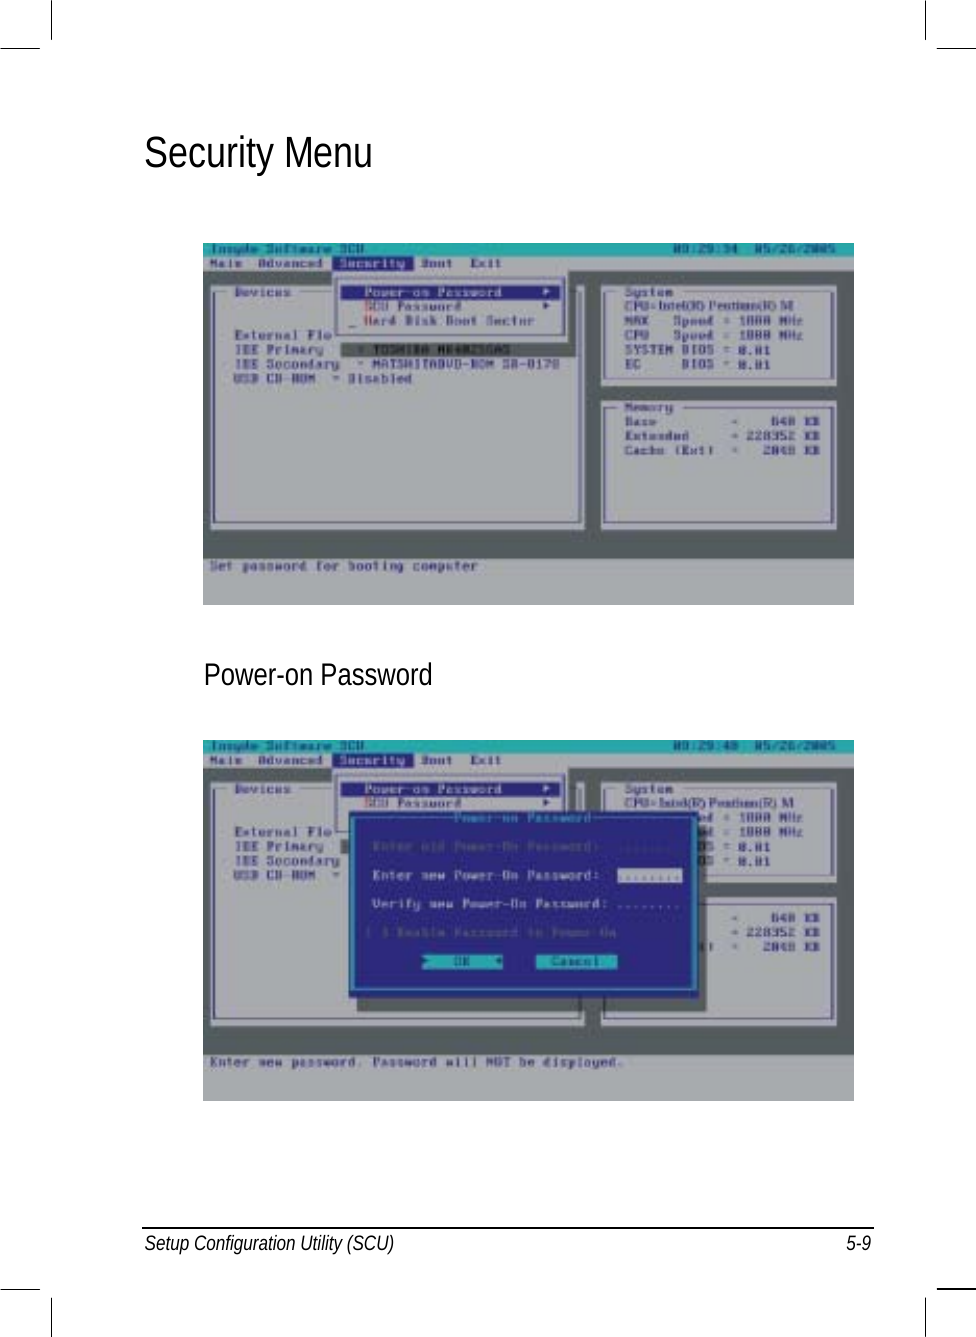  Setup Configuration Utility (SCU)  5-9 Security Menu  Power-on Password   